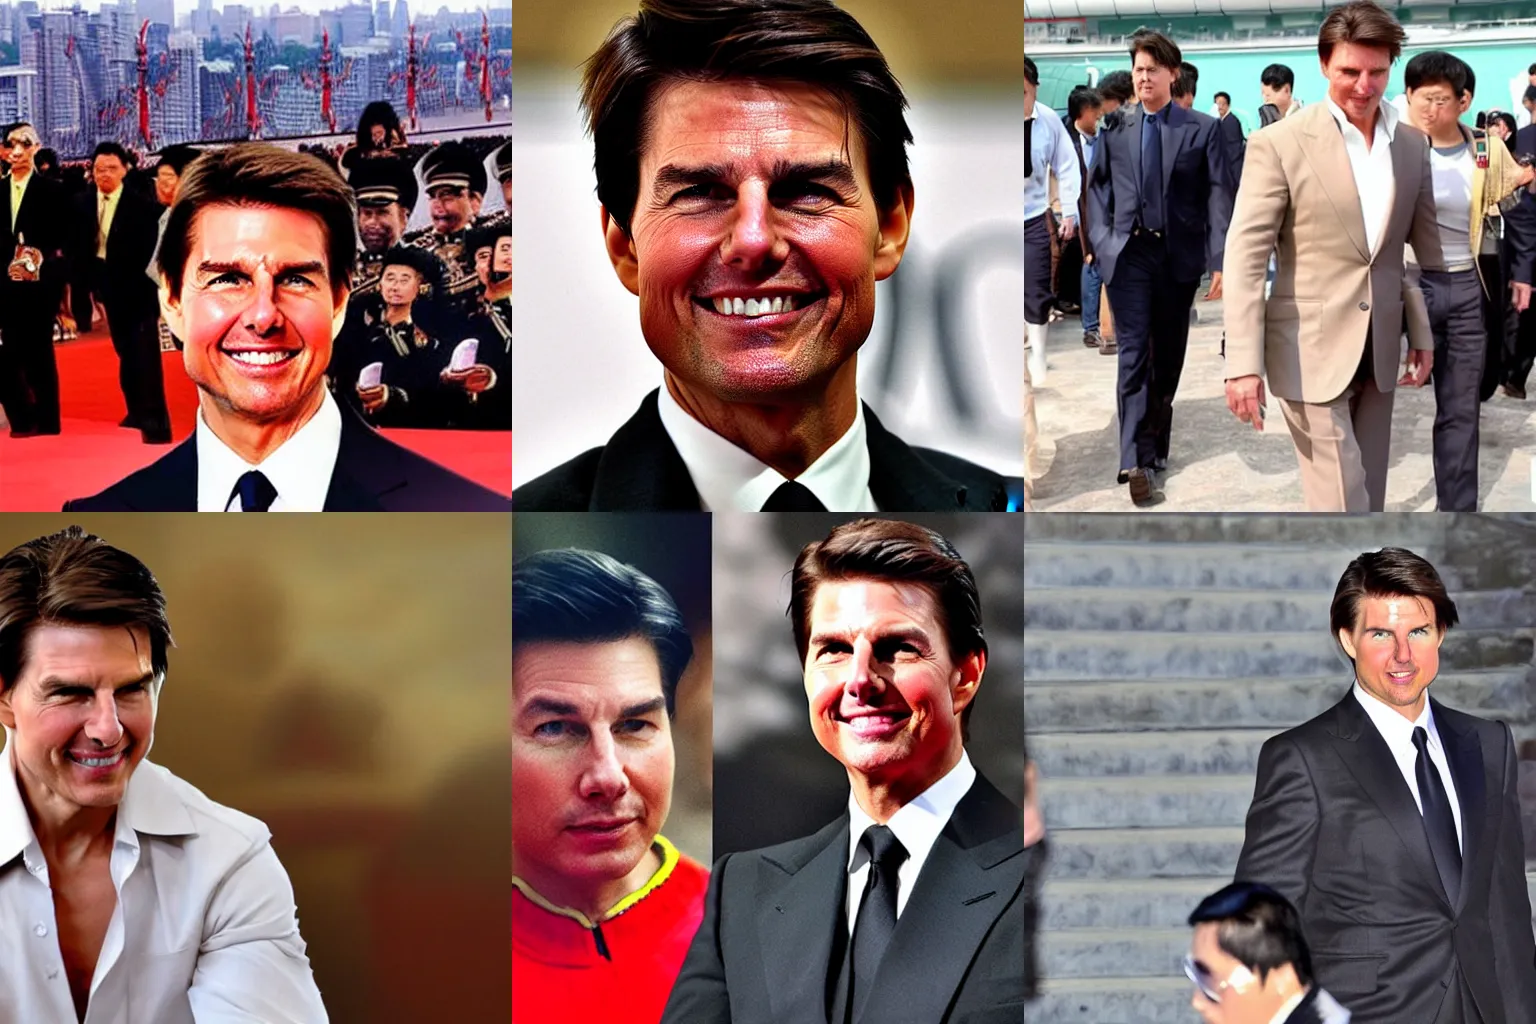 Prompt: Tom Cruise as Xi Jinping